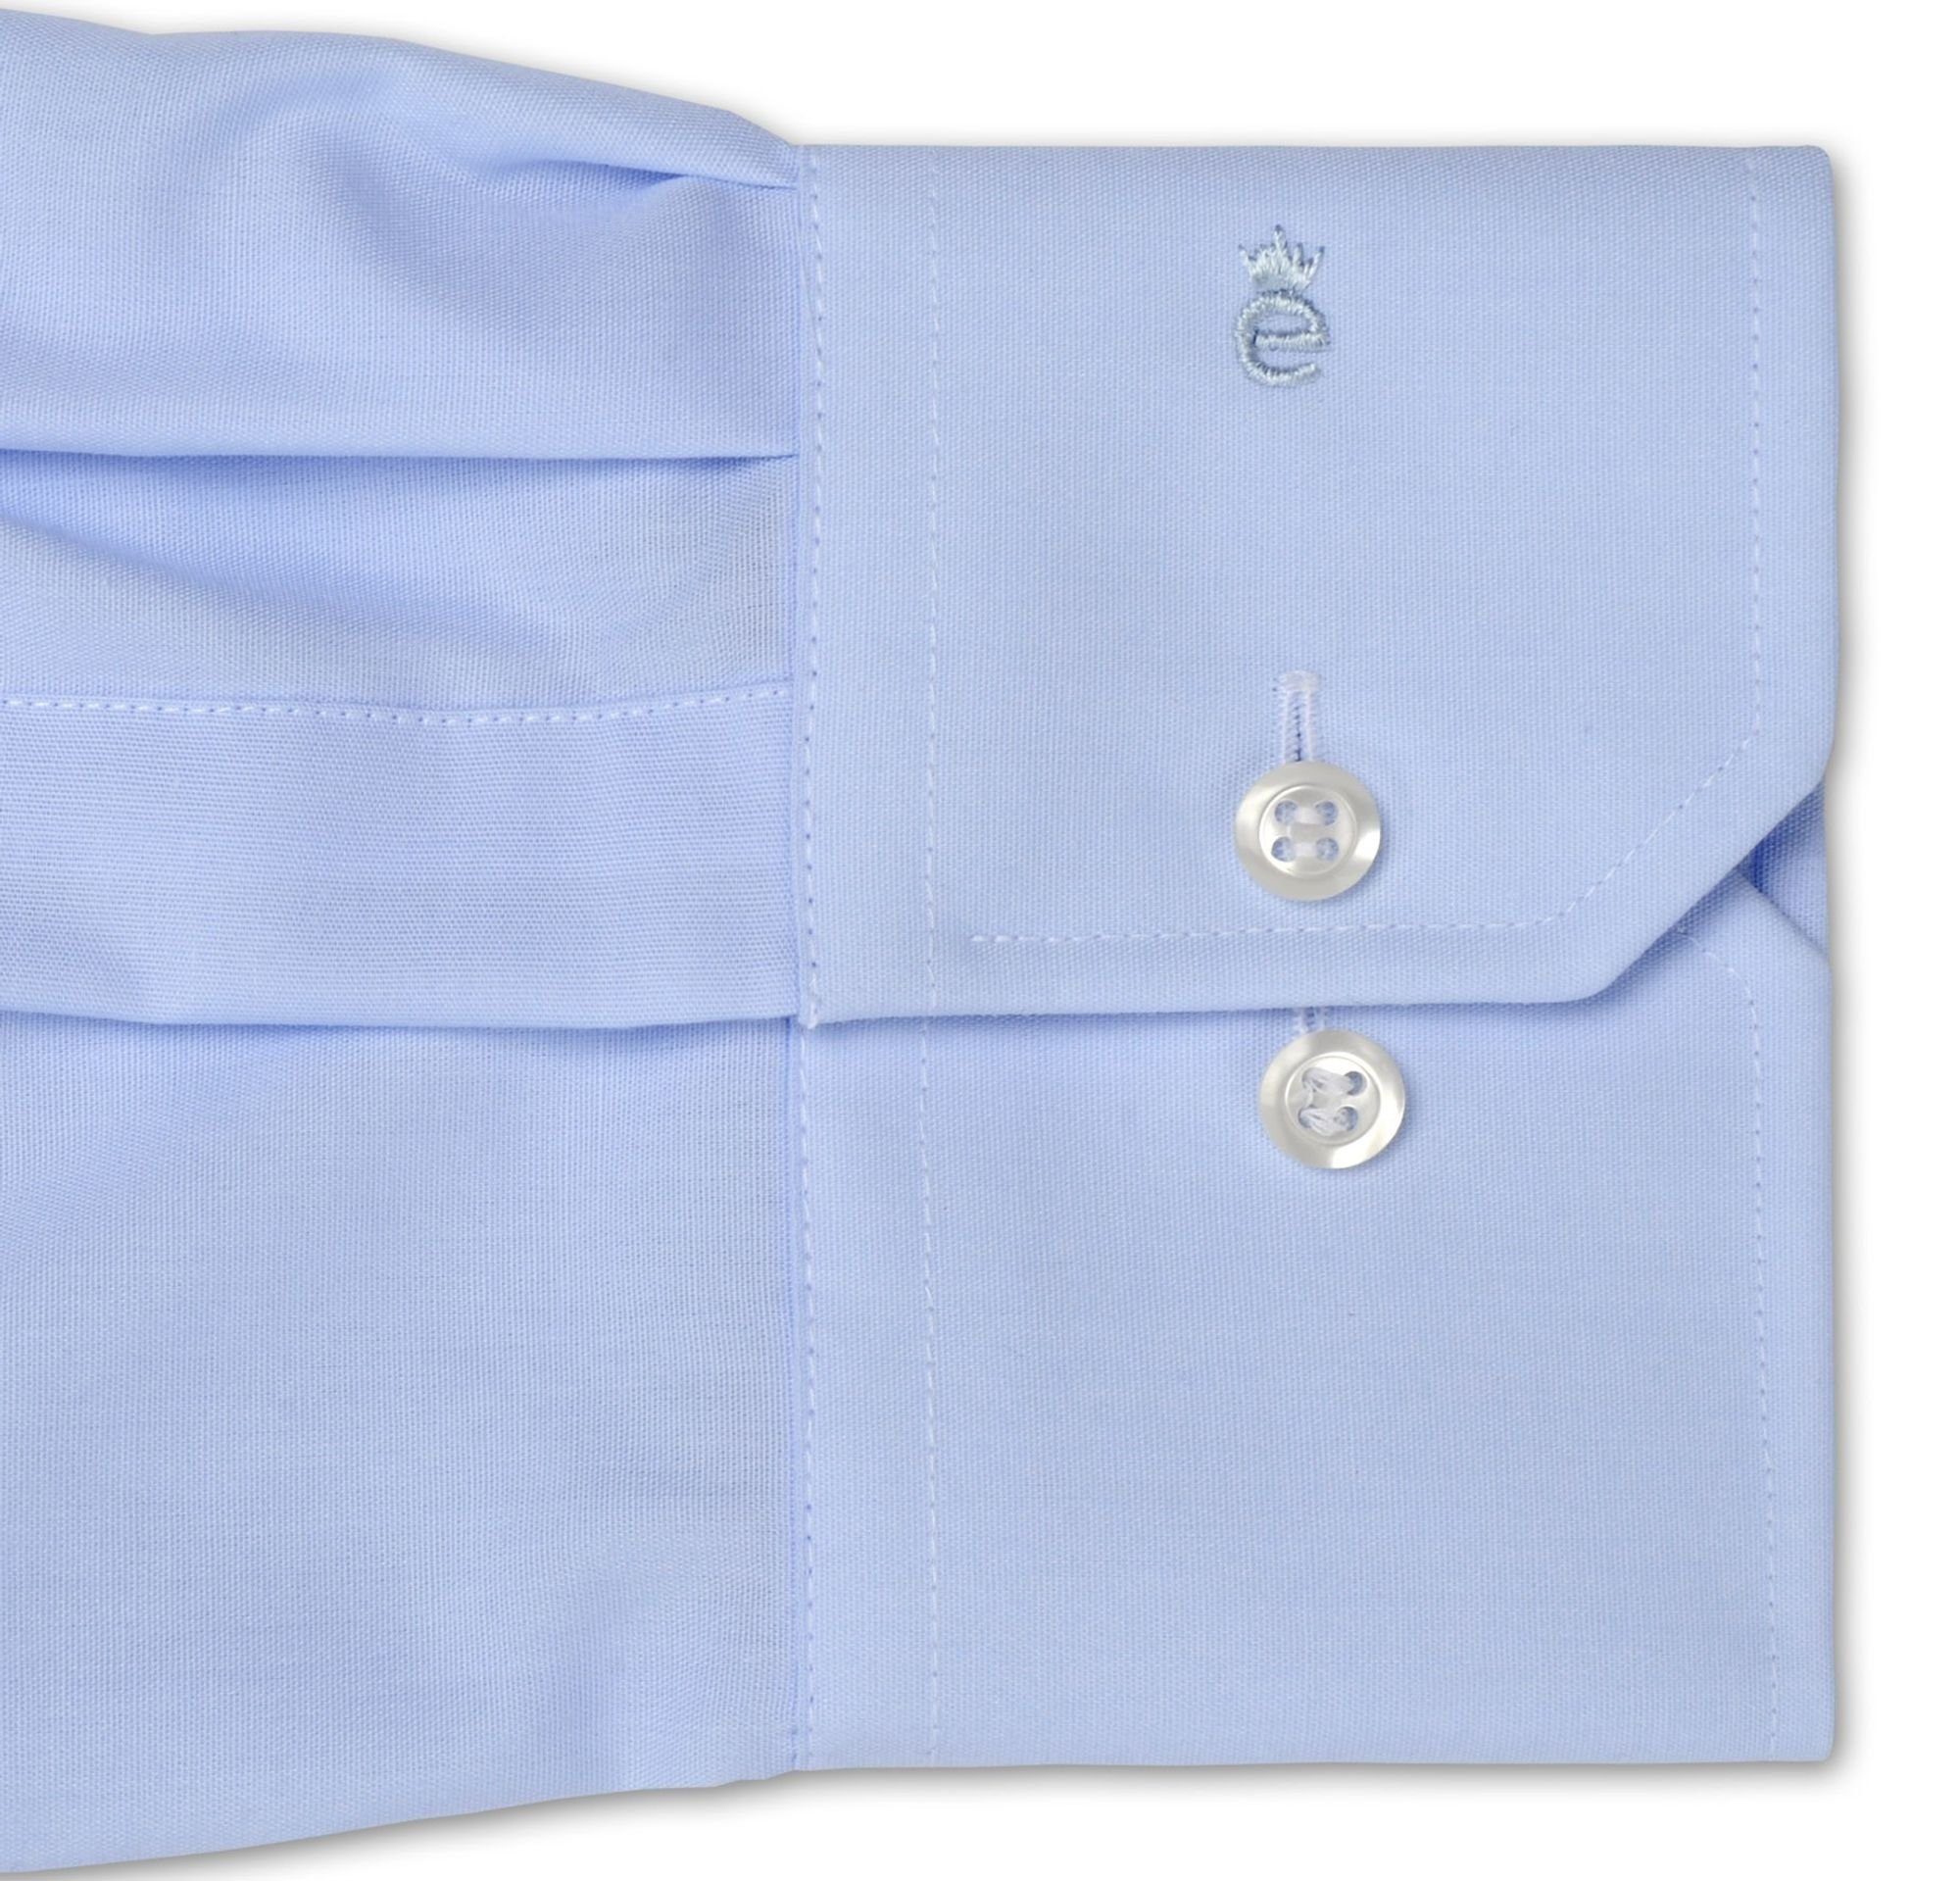 Einfarbig Langarmhemd Fit (10) Modern Eterna strukturiert Hellblau